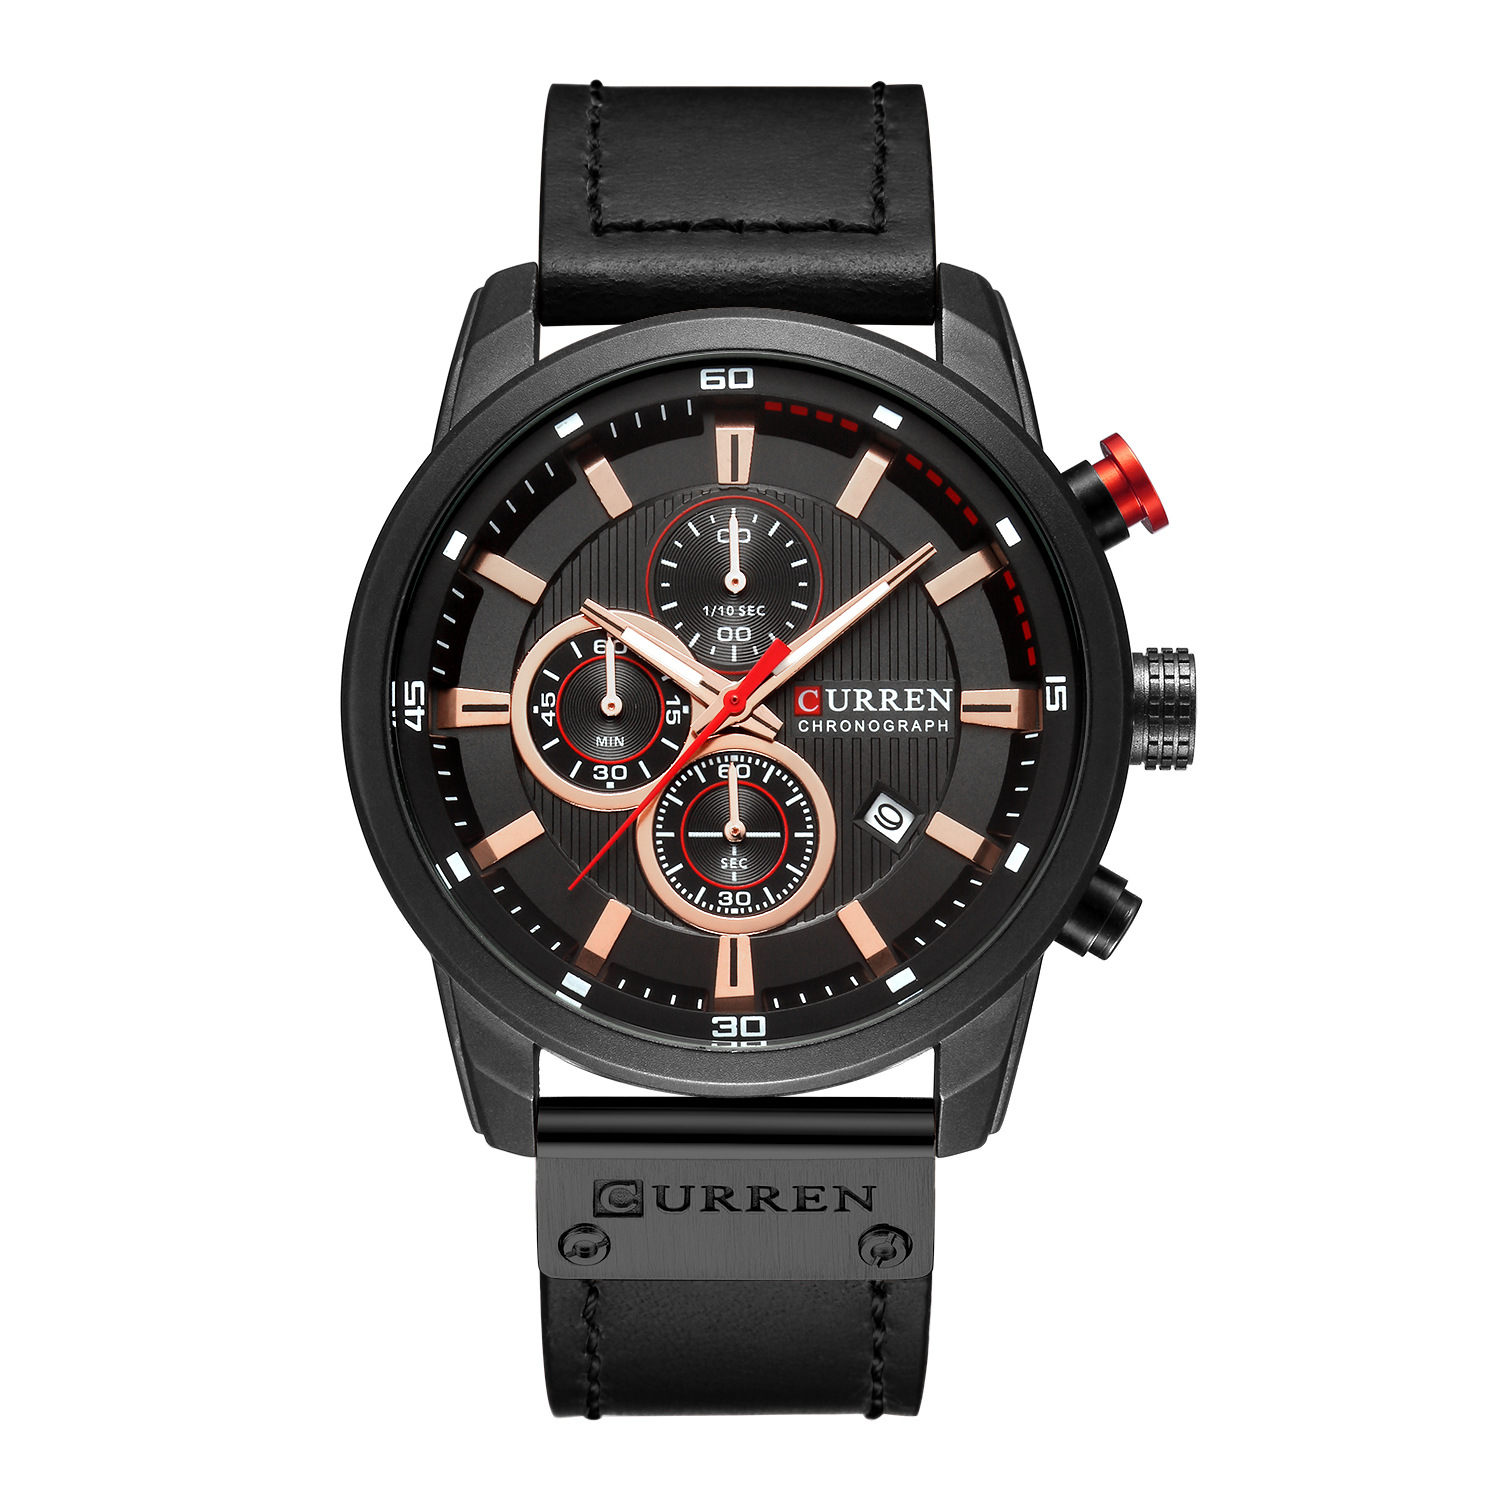 Men Waterproof Chronograph Sport Military Male Clock Top Brand Luxury Leather Man Wristwatch